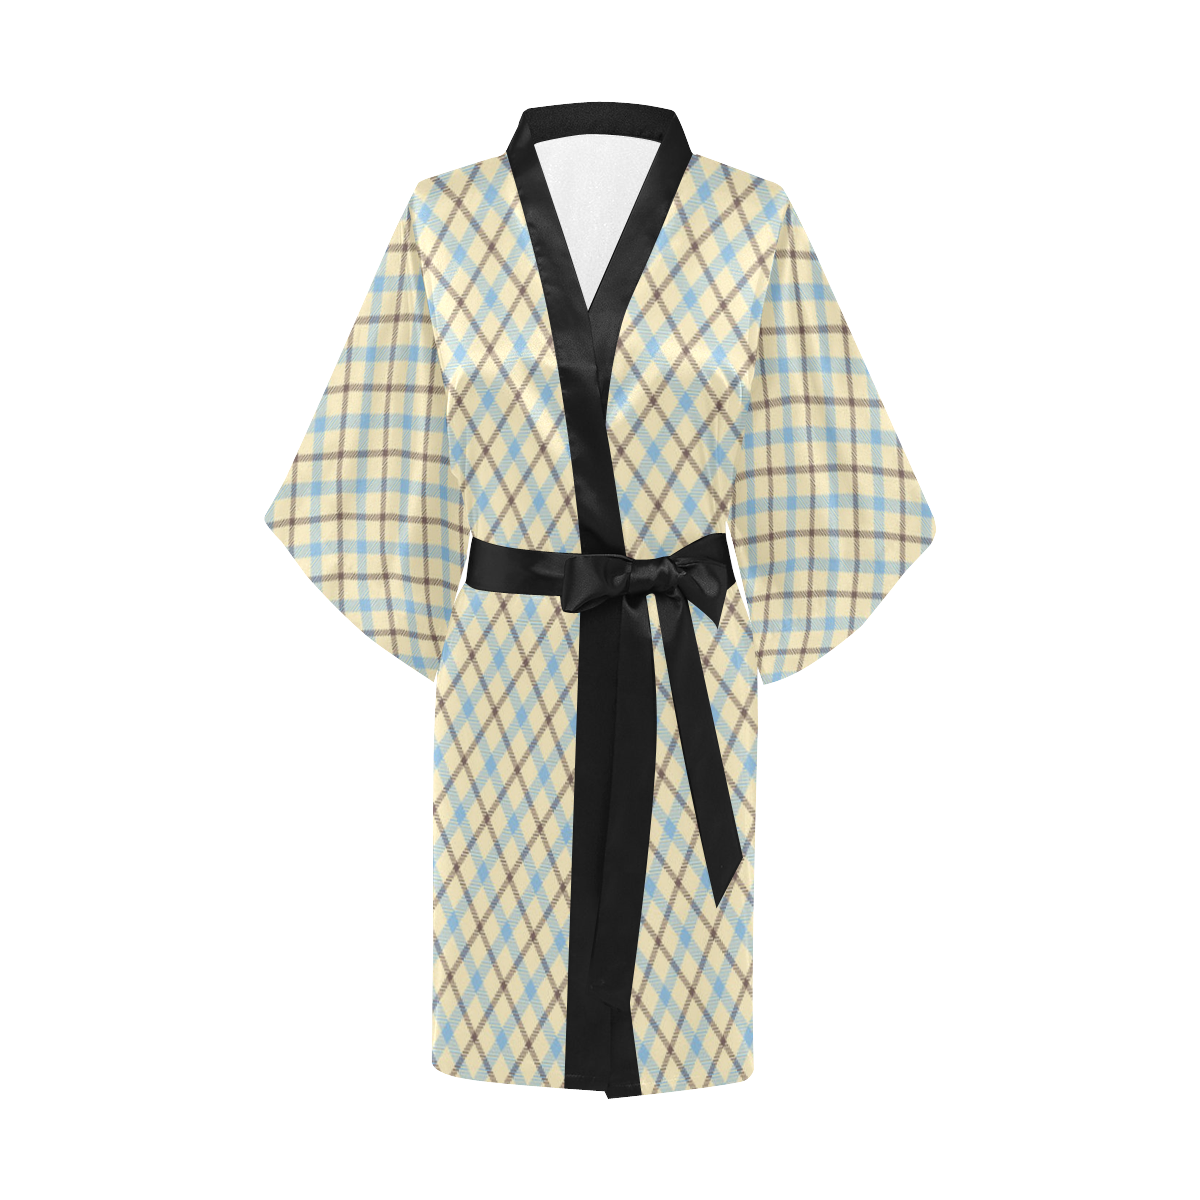 plaid tartan in cream, baby blue and brown 1 Kimono Robe